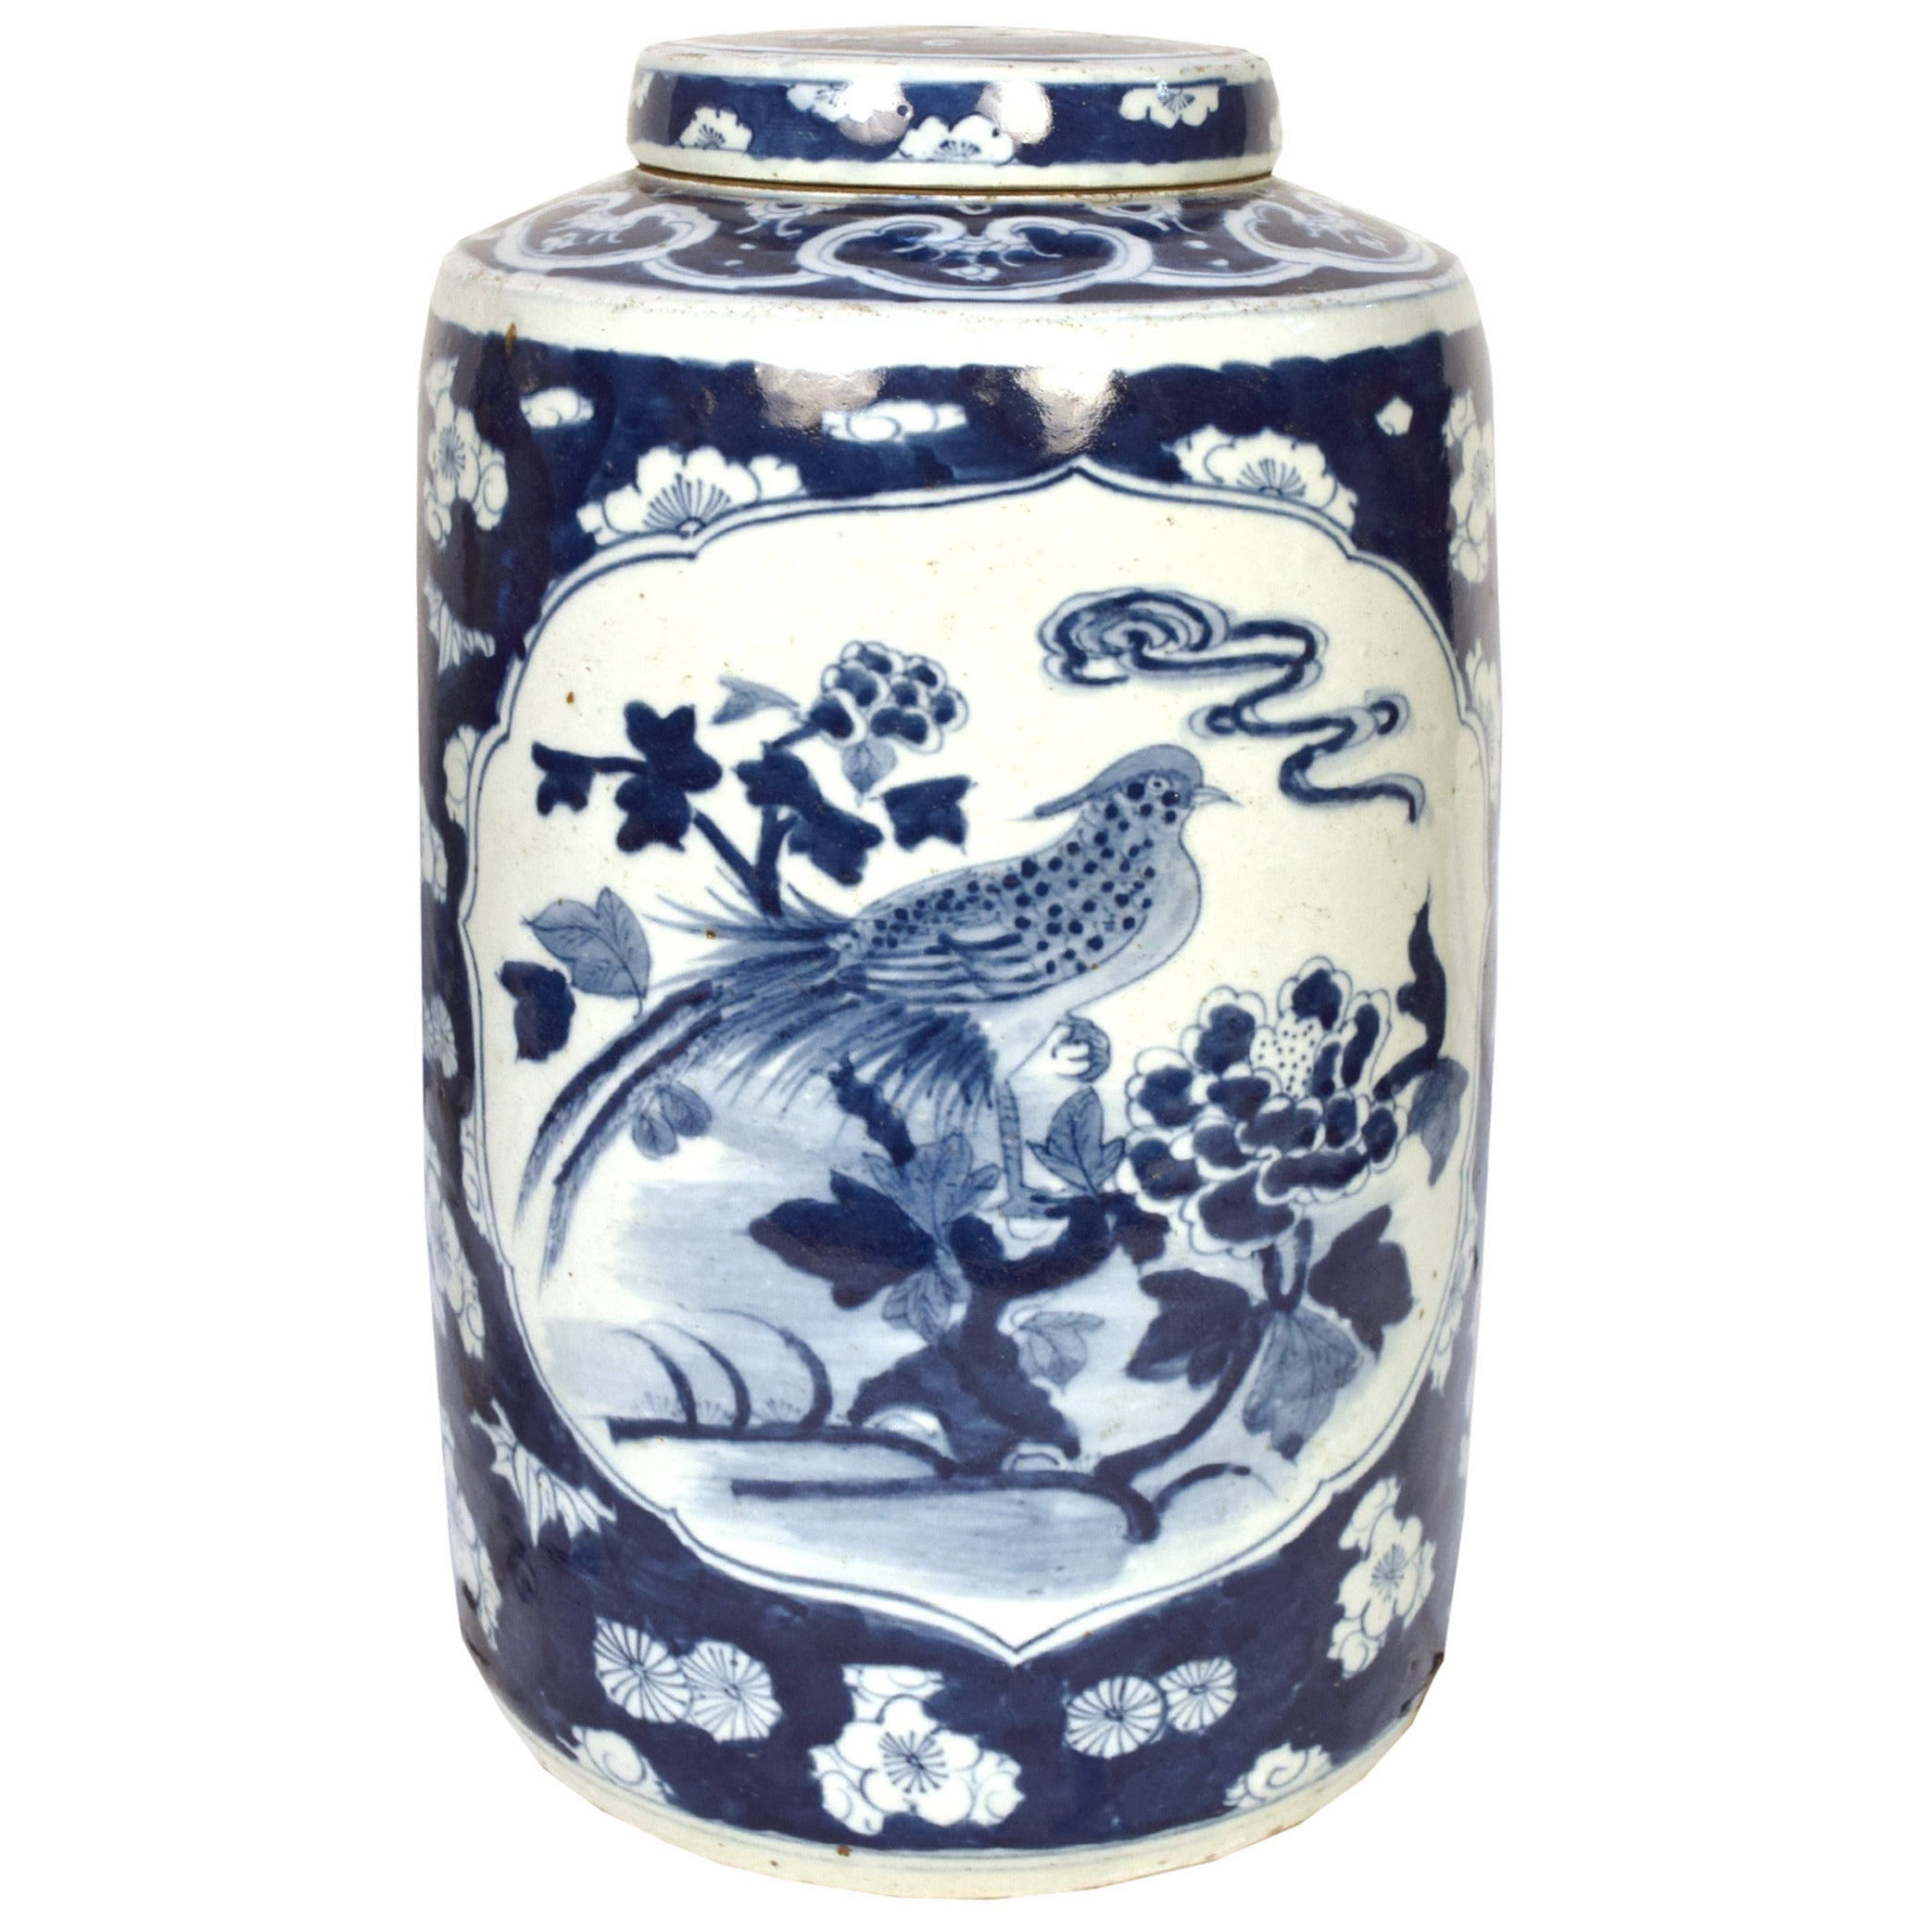 Vintage Chinese Indigo Tea Leaf Jar with Birds and Botanicals